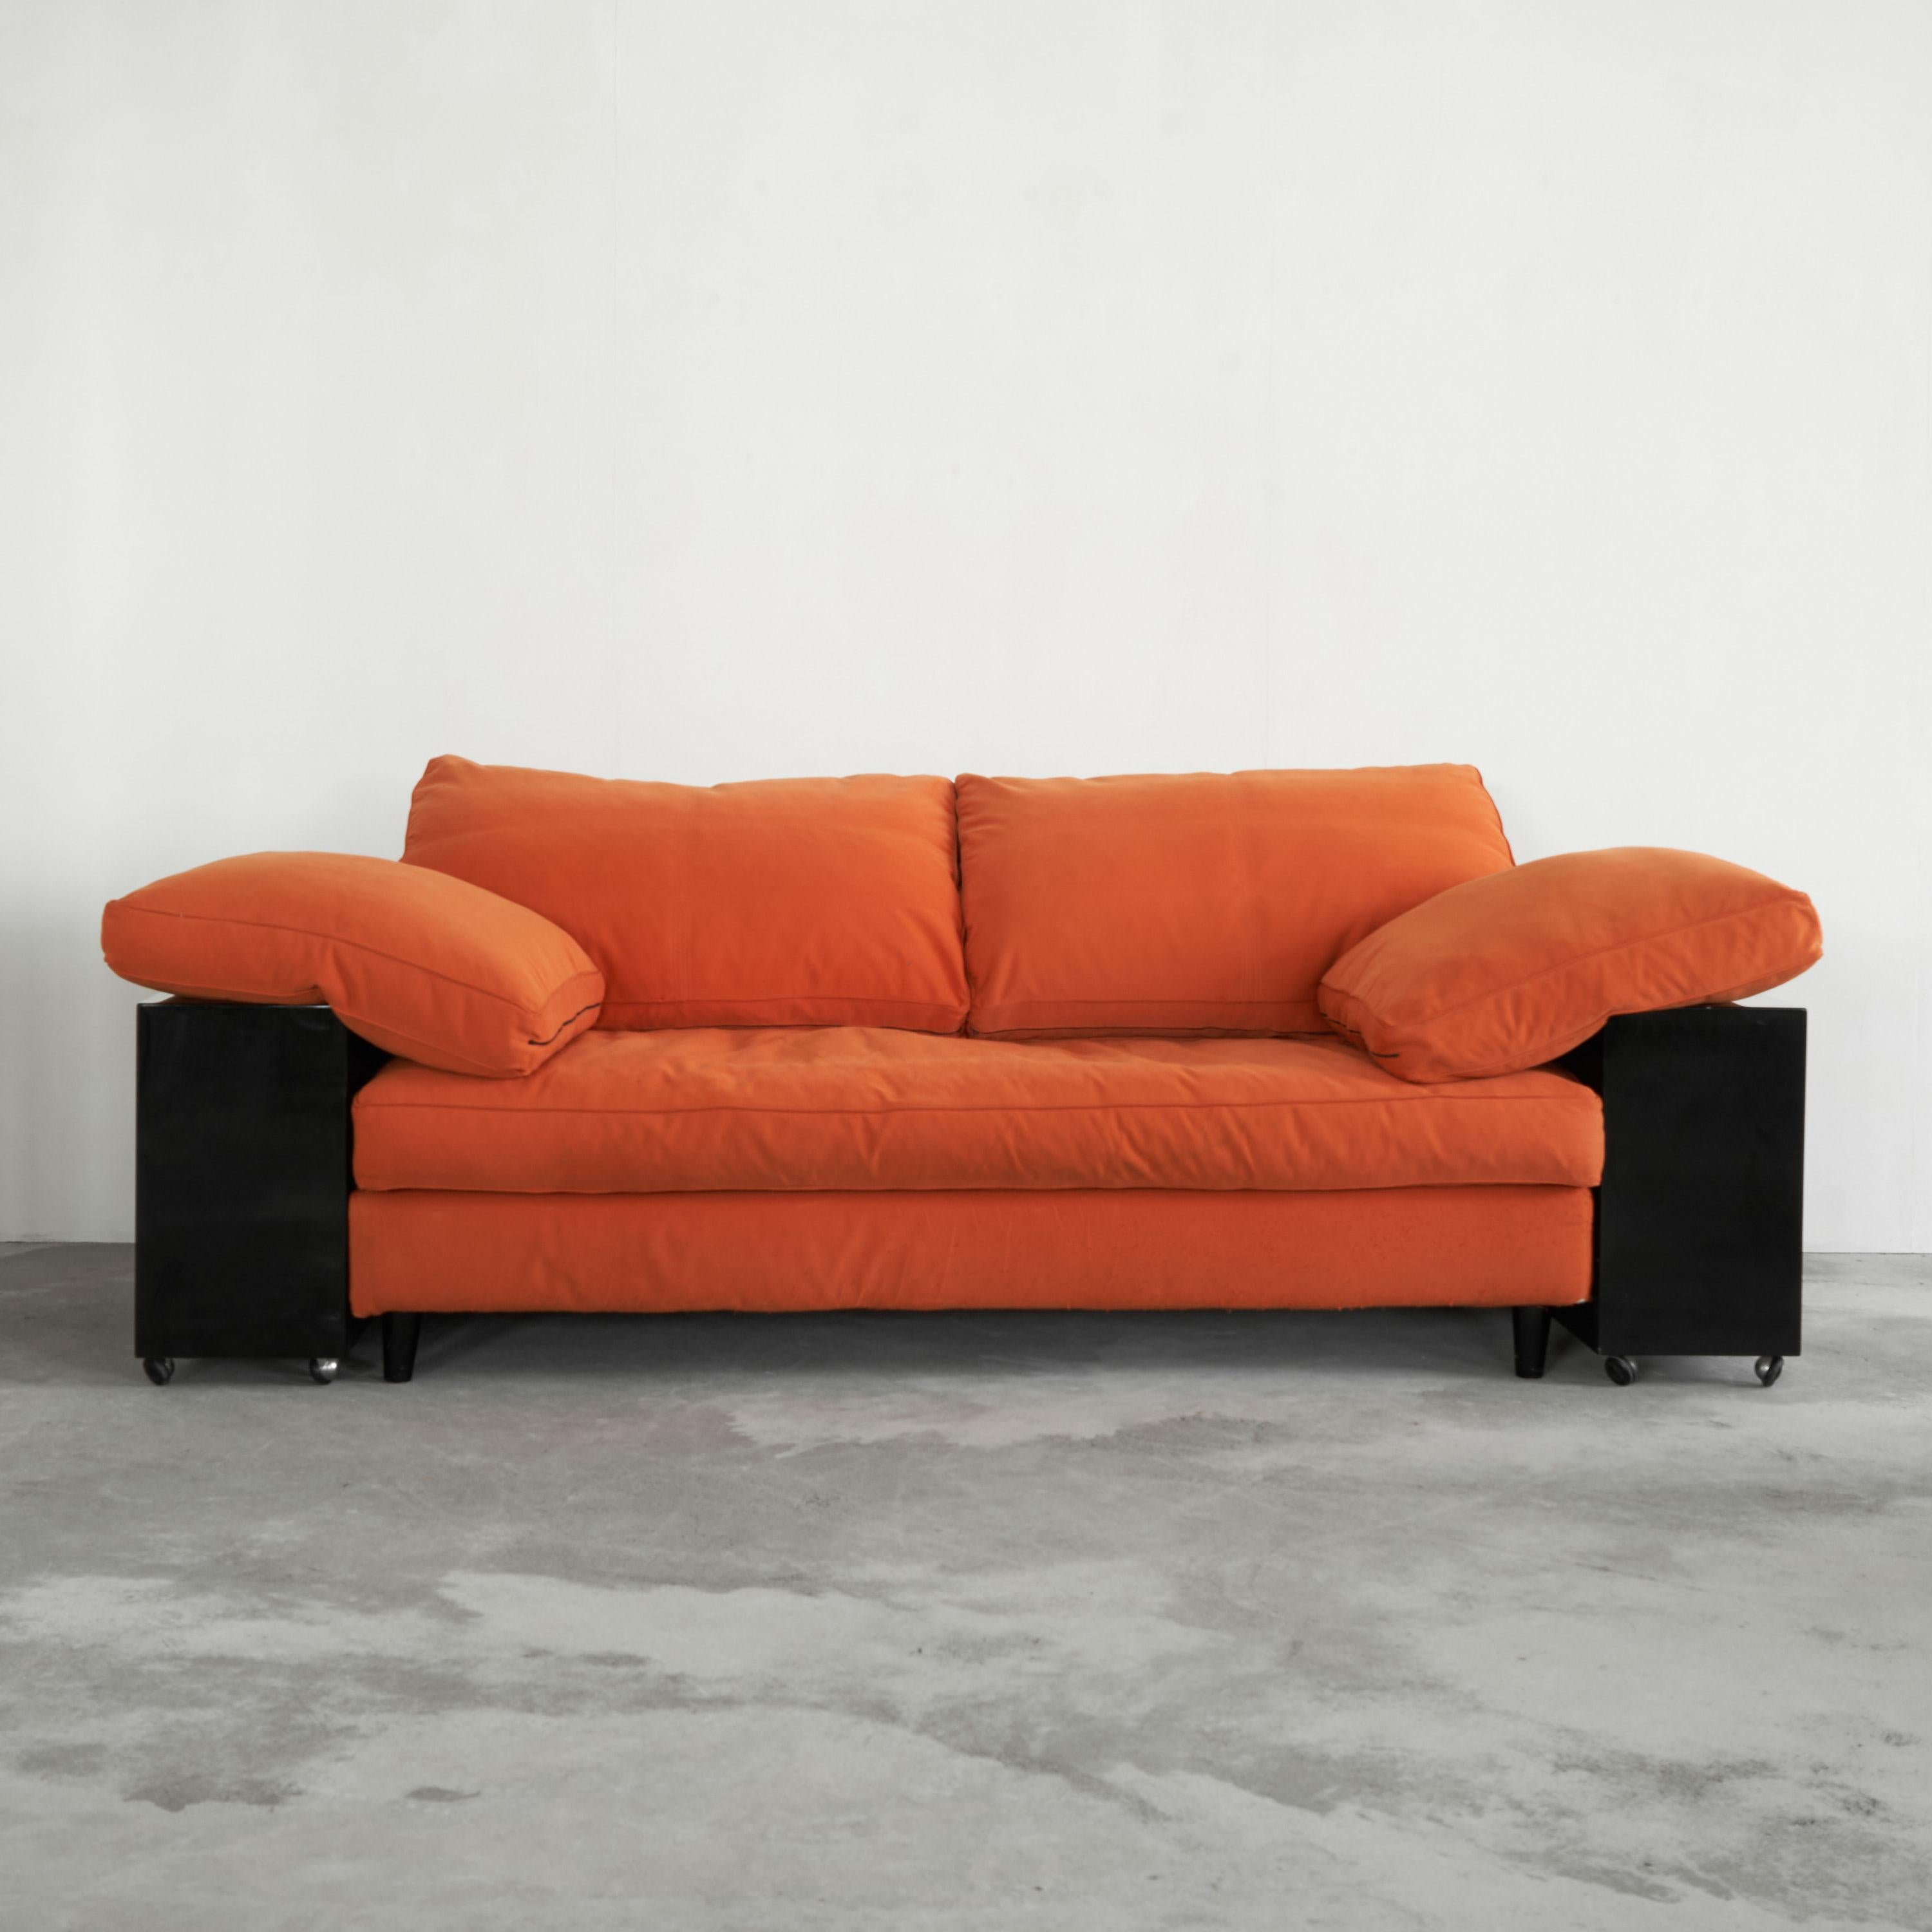 Européen Eileen Gray 'Lota' Sofa in Black Lacquer and Orange Fabric 1980s en vente